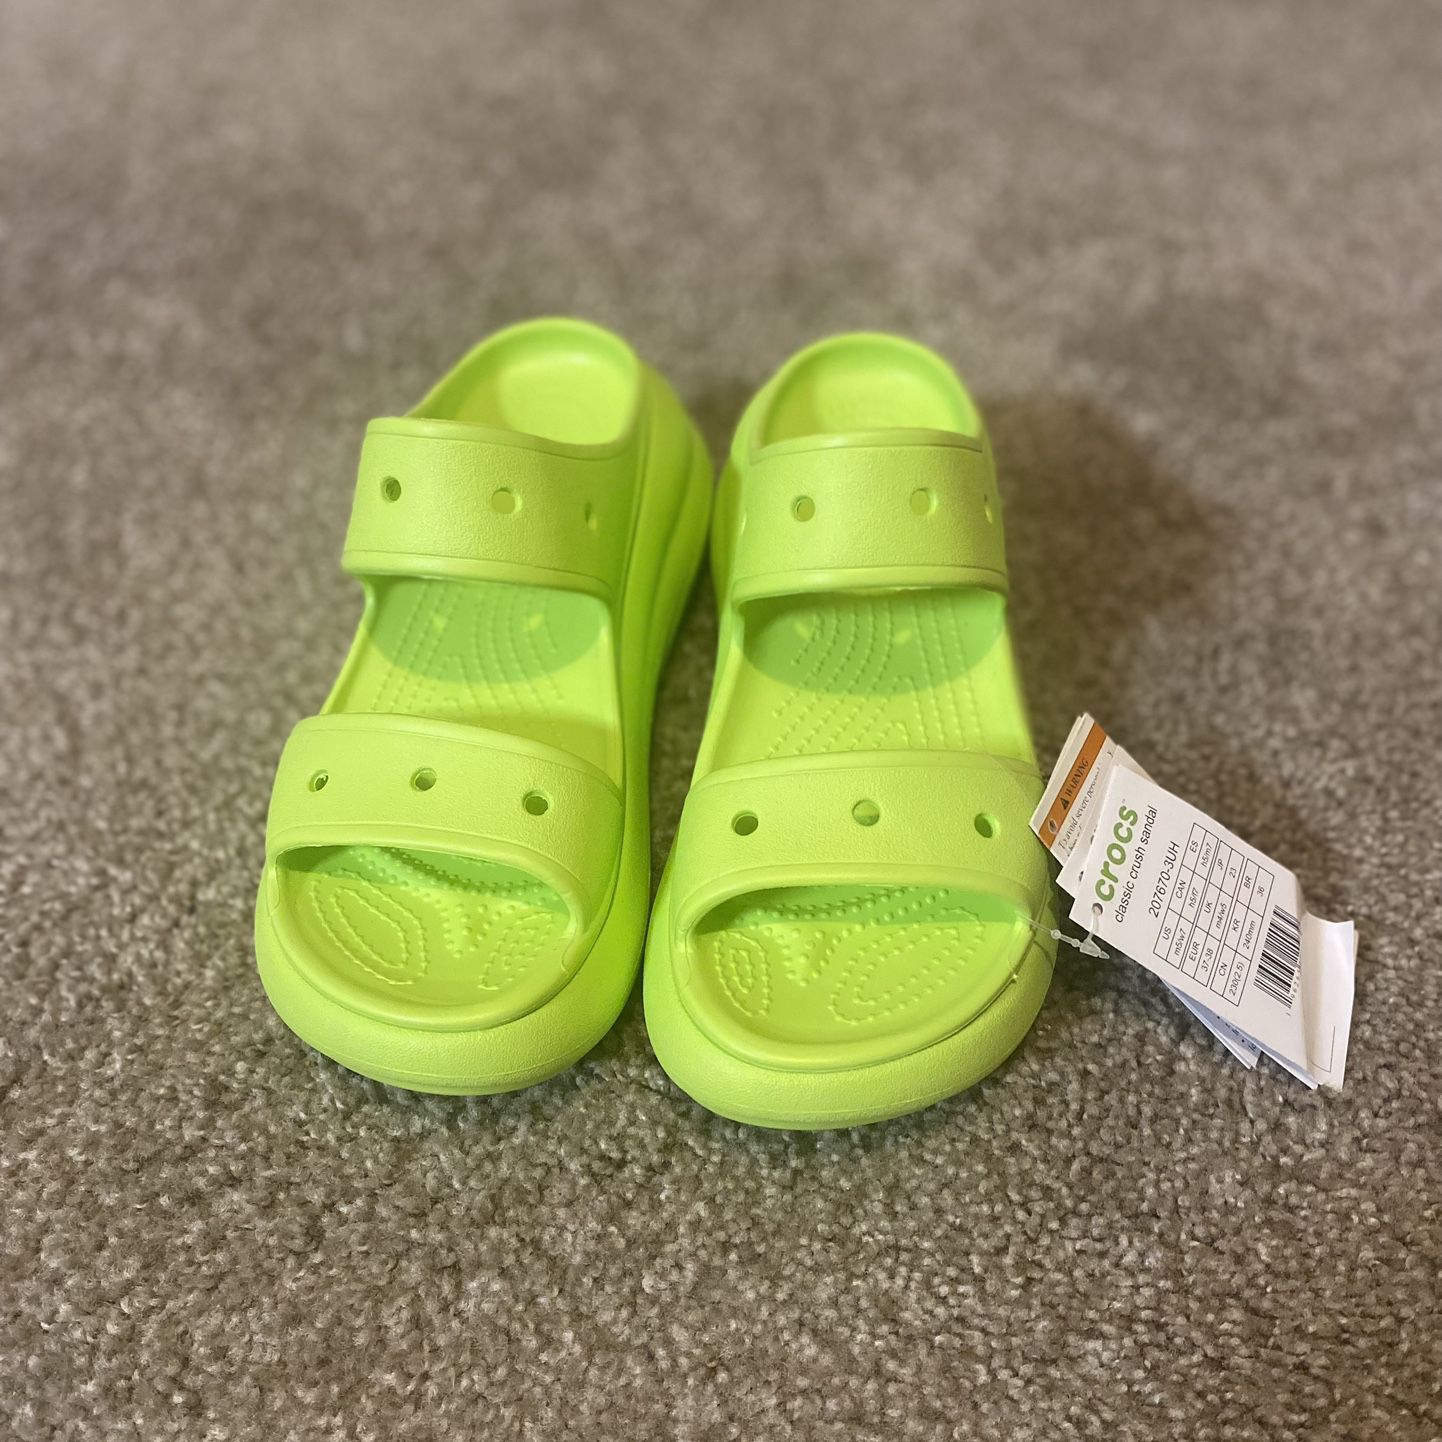 Brand New Green Crush Crocs Sandals.